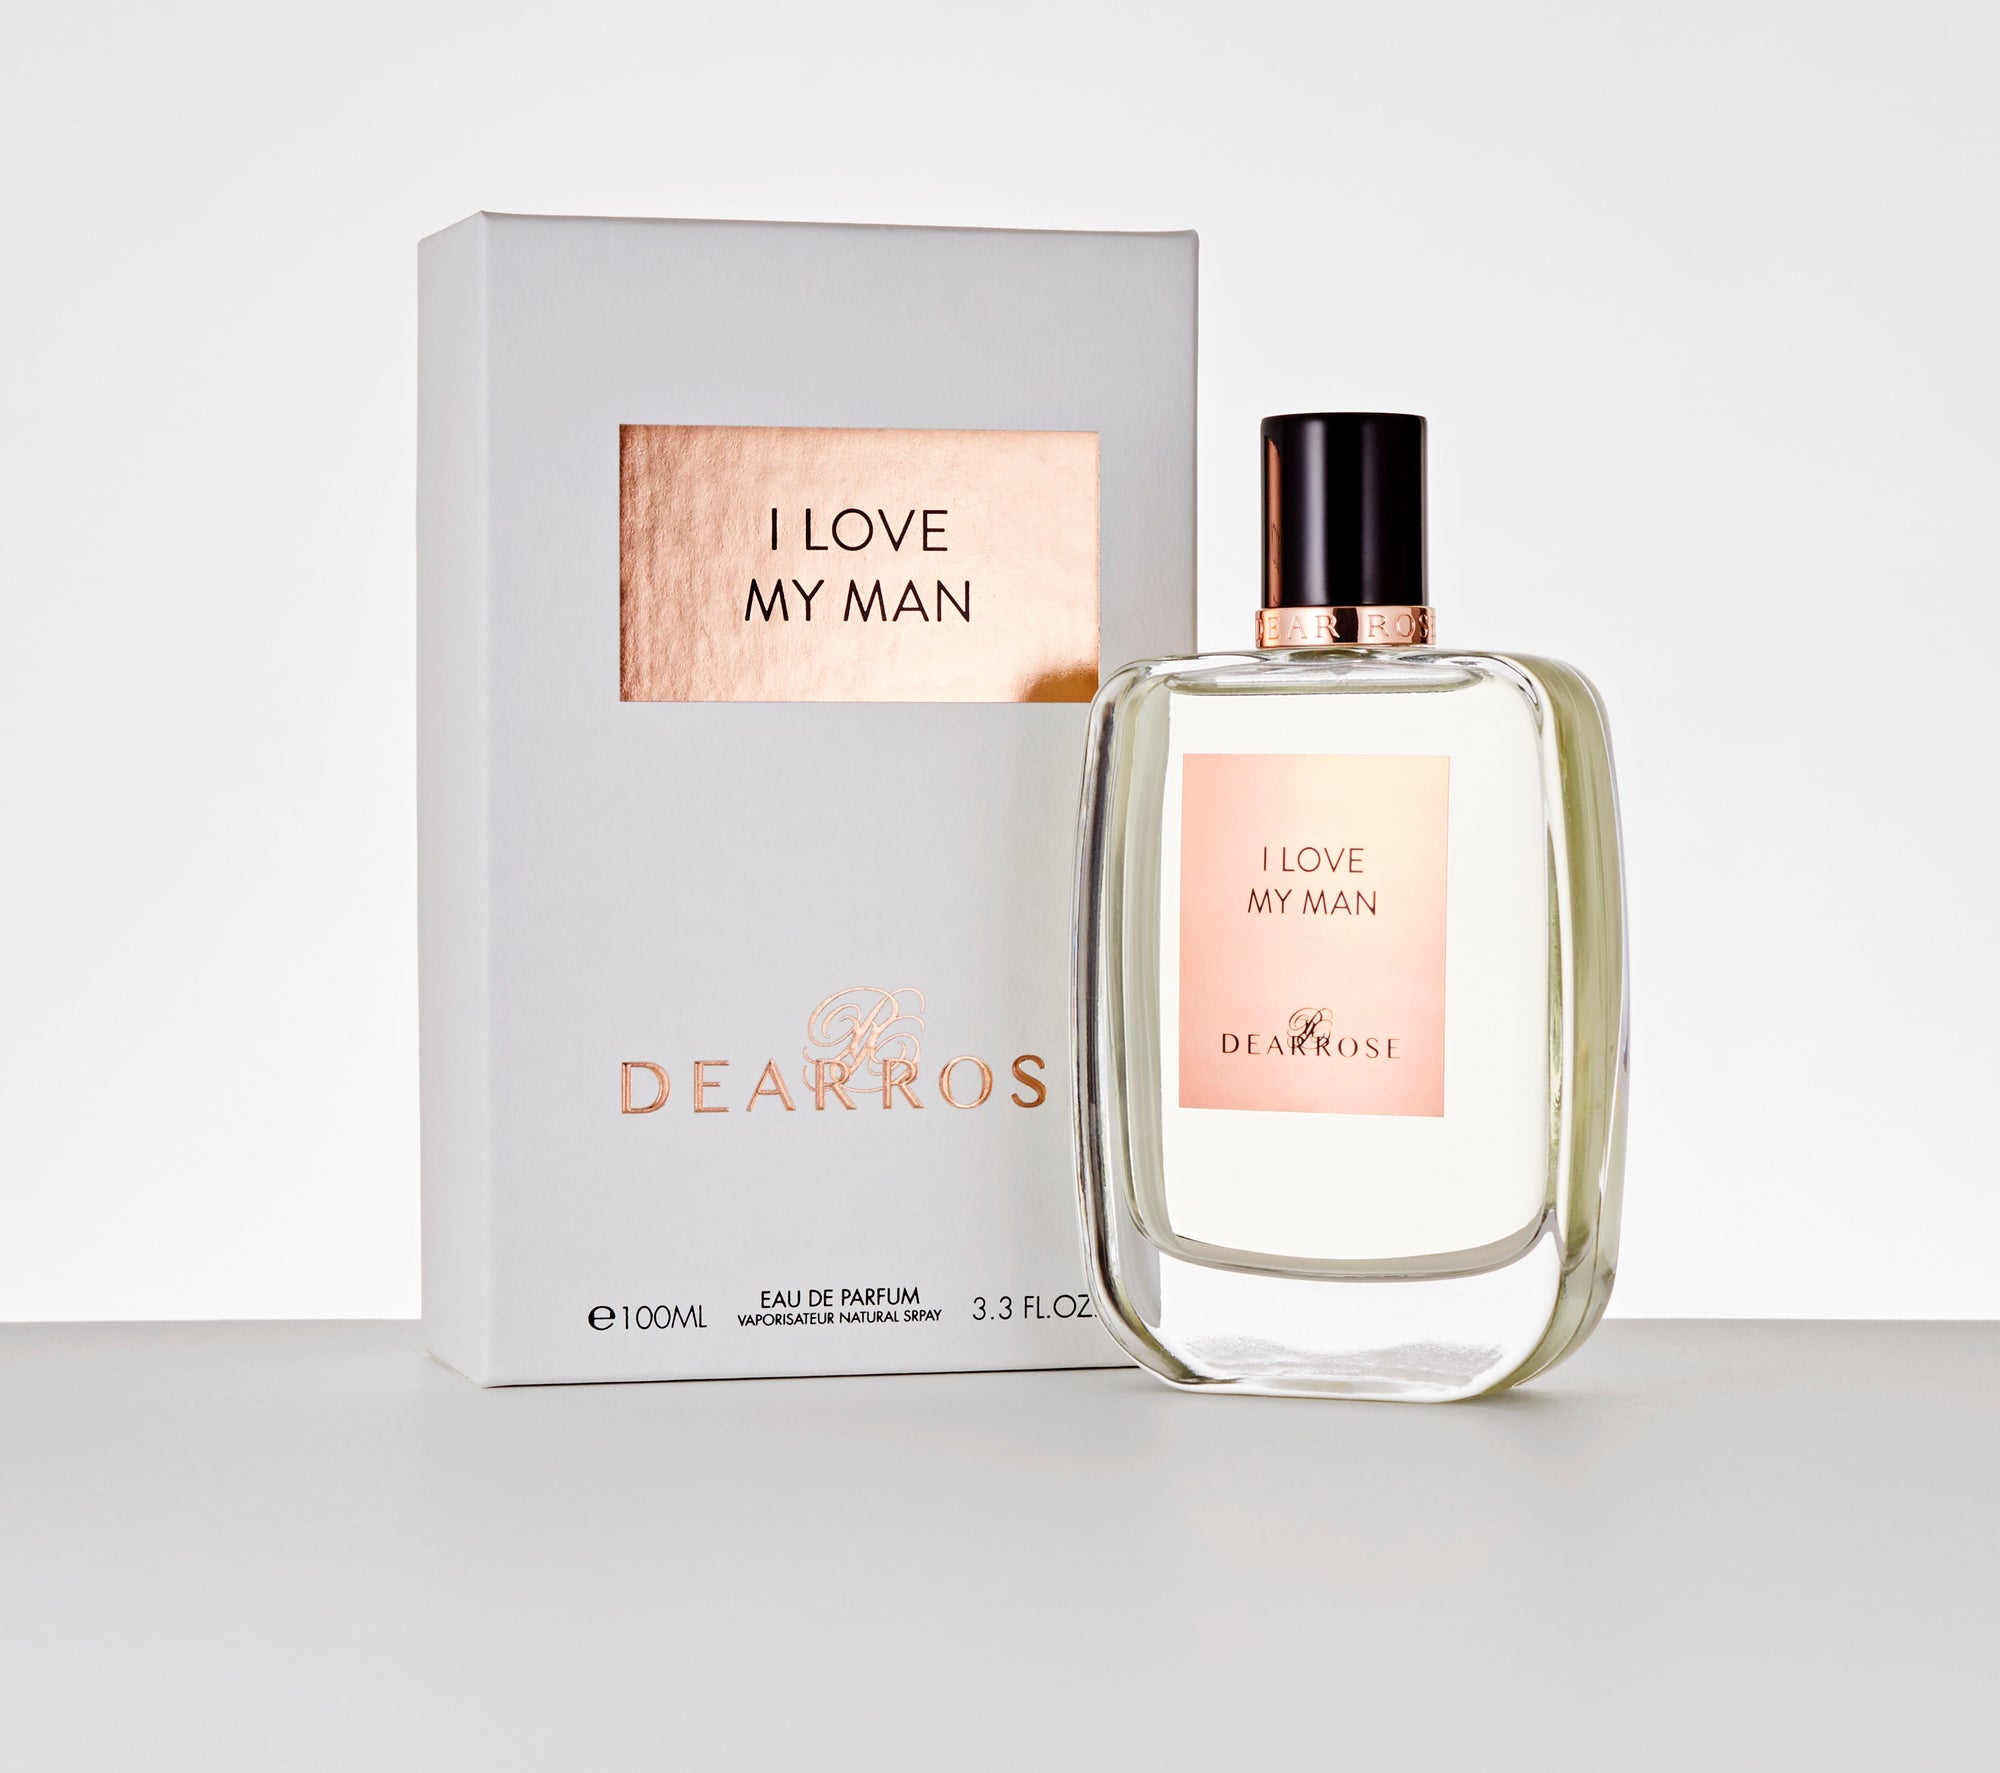 Dear Rose Perfume "I Love My Man", France perfume